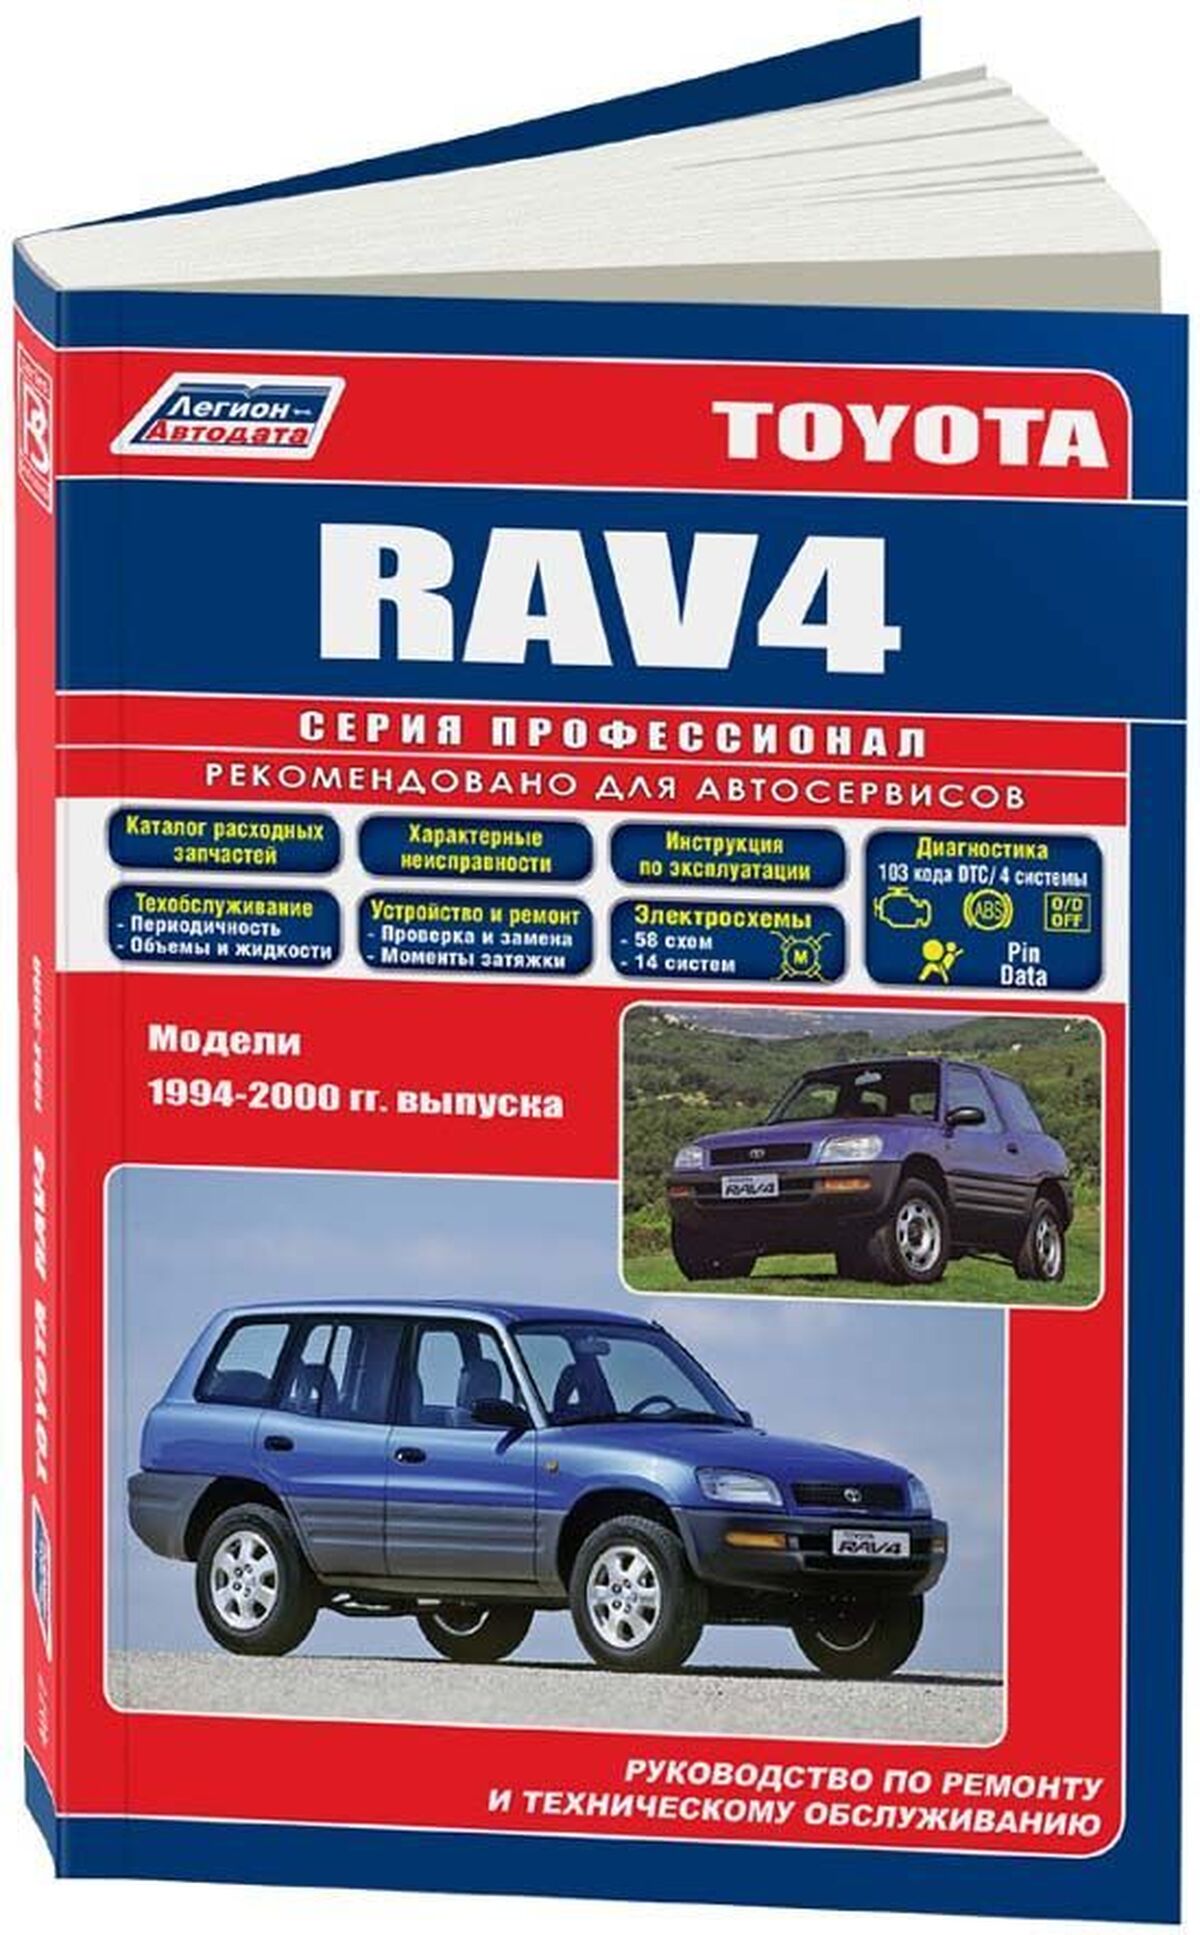 Книга: TOYOTA RAV4 (б) 1994-2000 г.в., рем., экспл., то, сер.ПРОФ. | Легион-Aвтодата